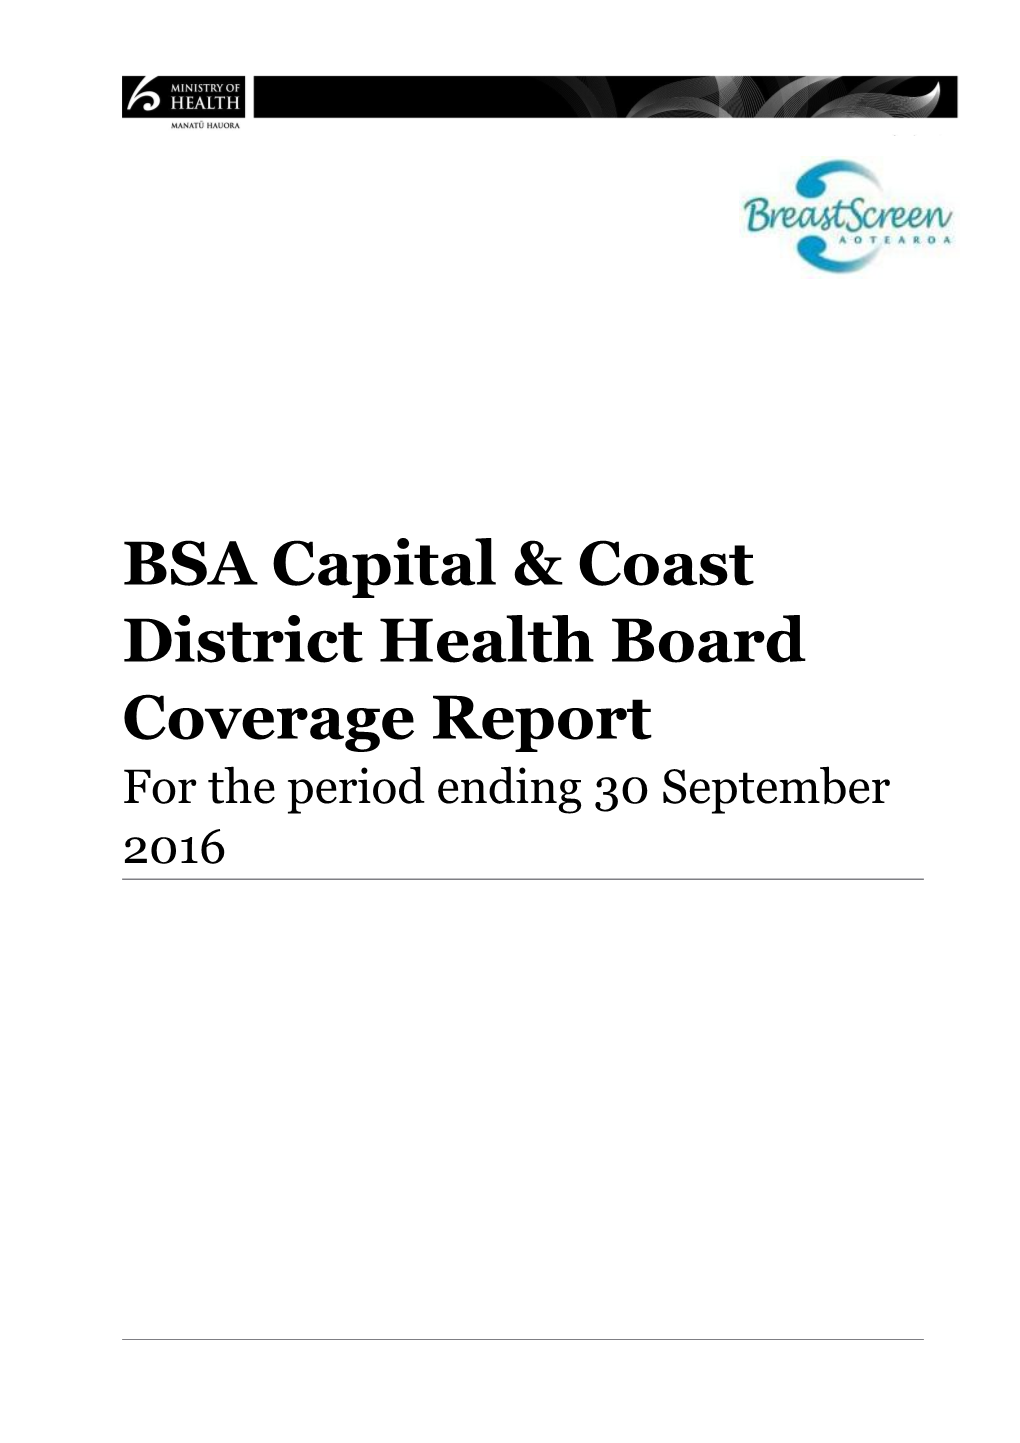 Bsacapital Coastdistrict Health Boardcoverage Report